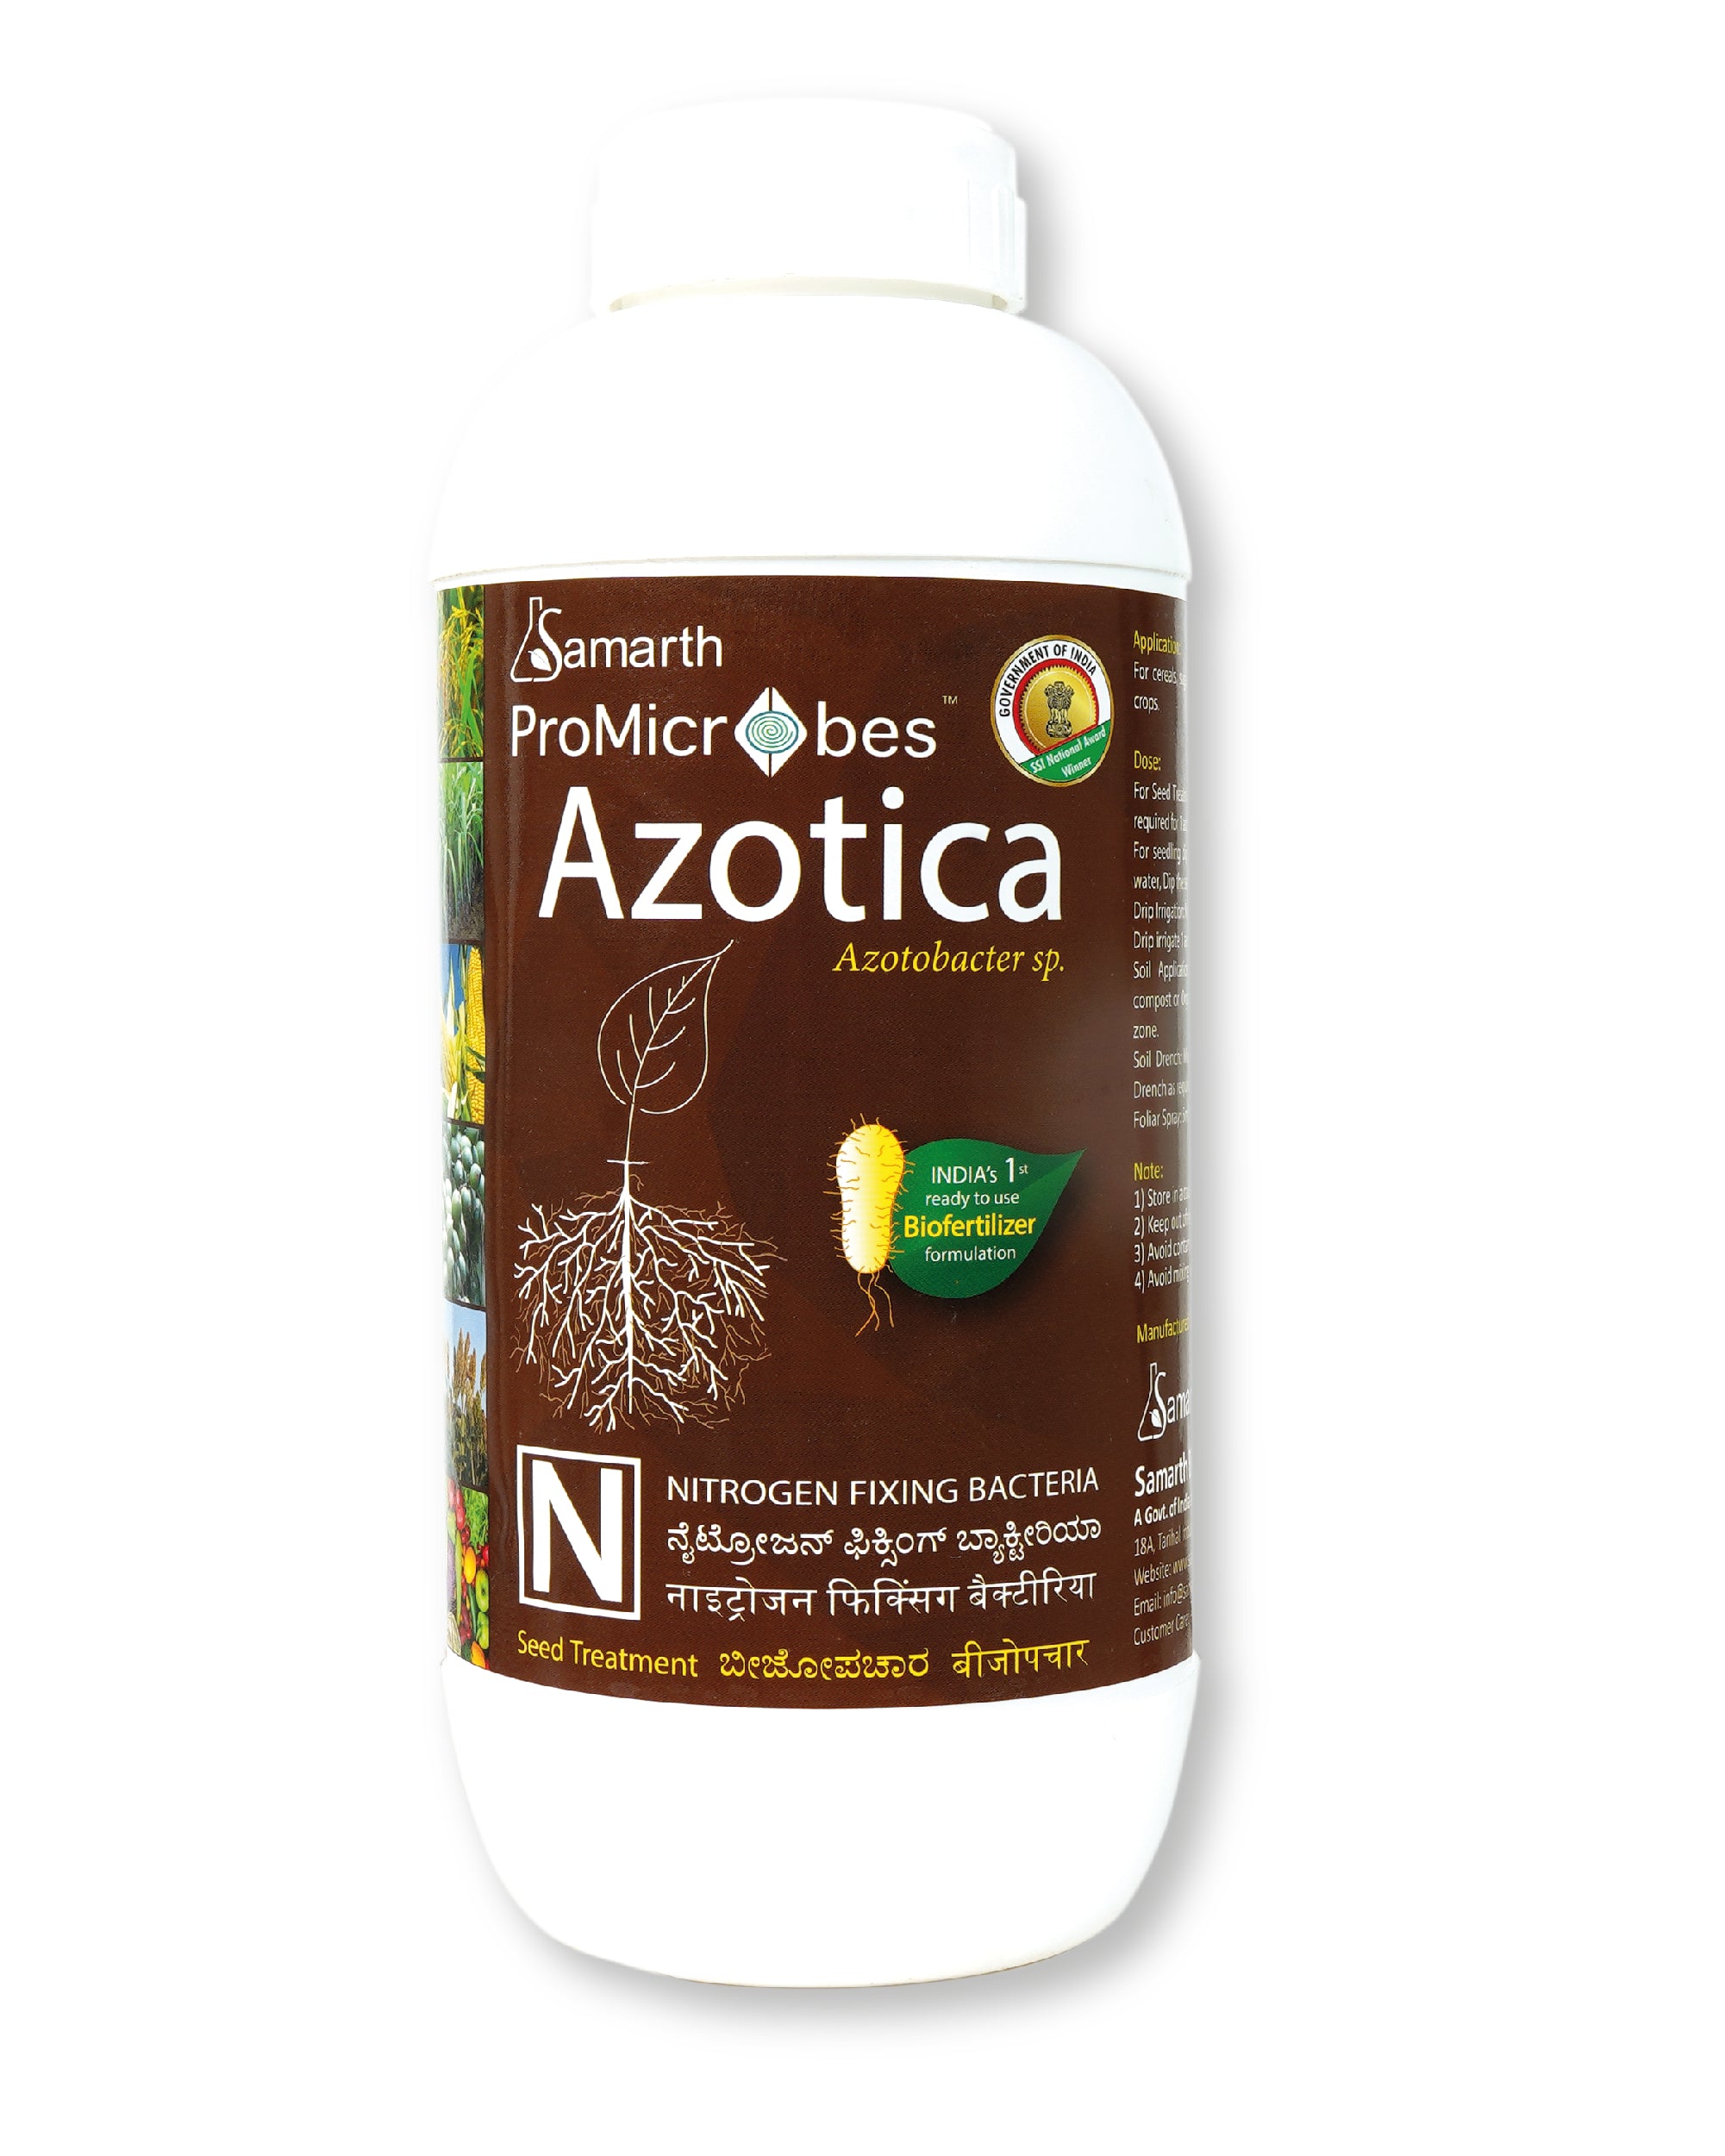 SAMRATH PROMICROBES AZOTICA product  Image